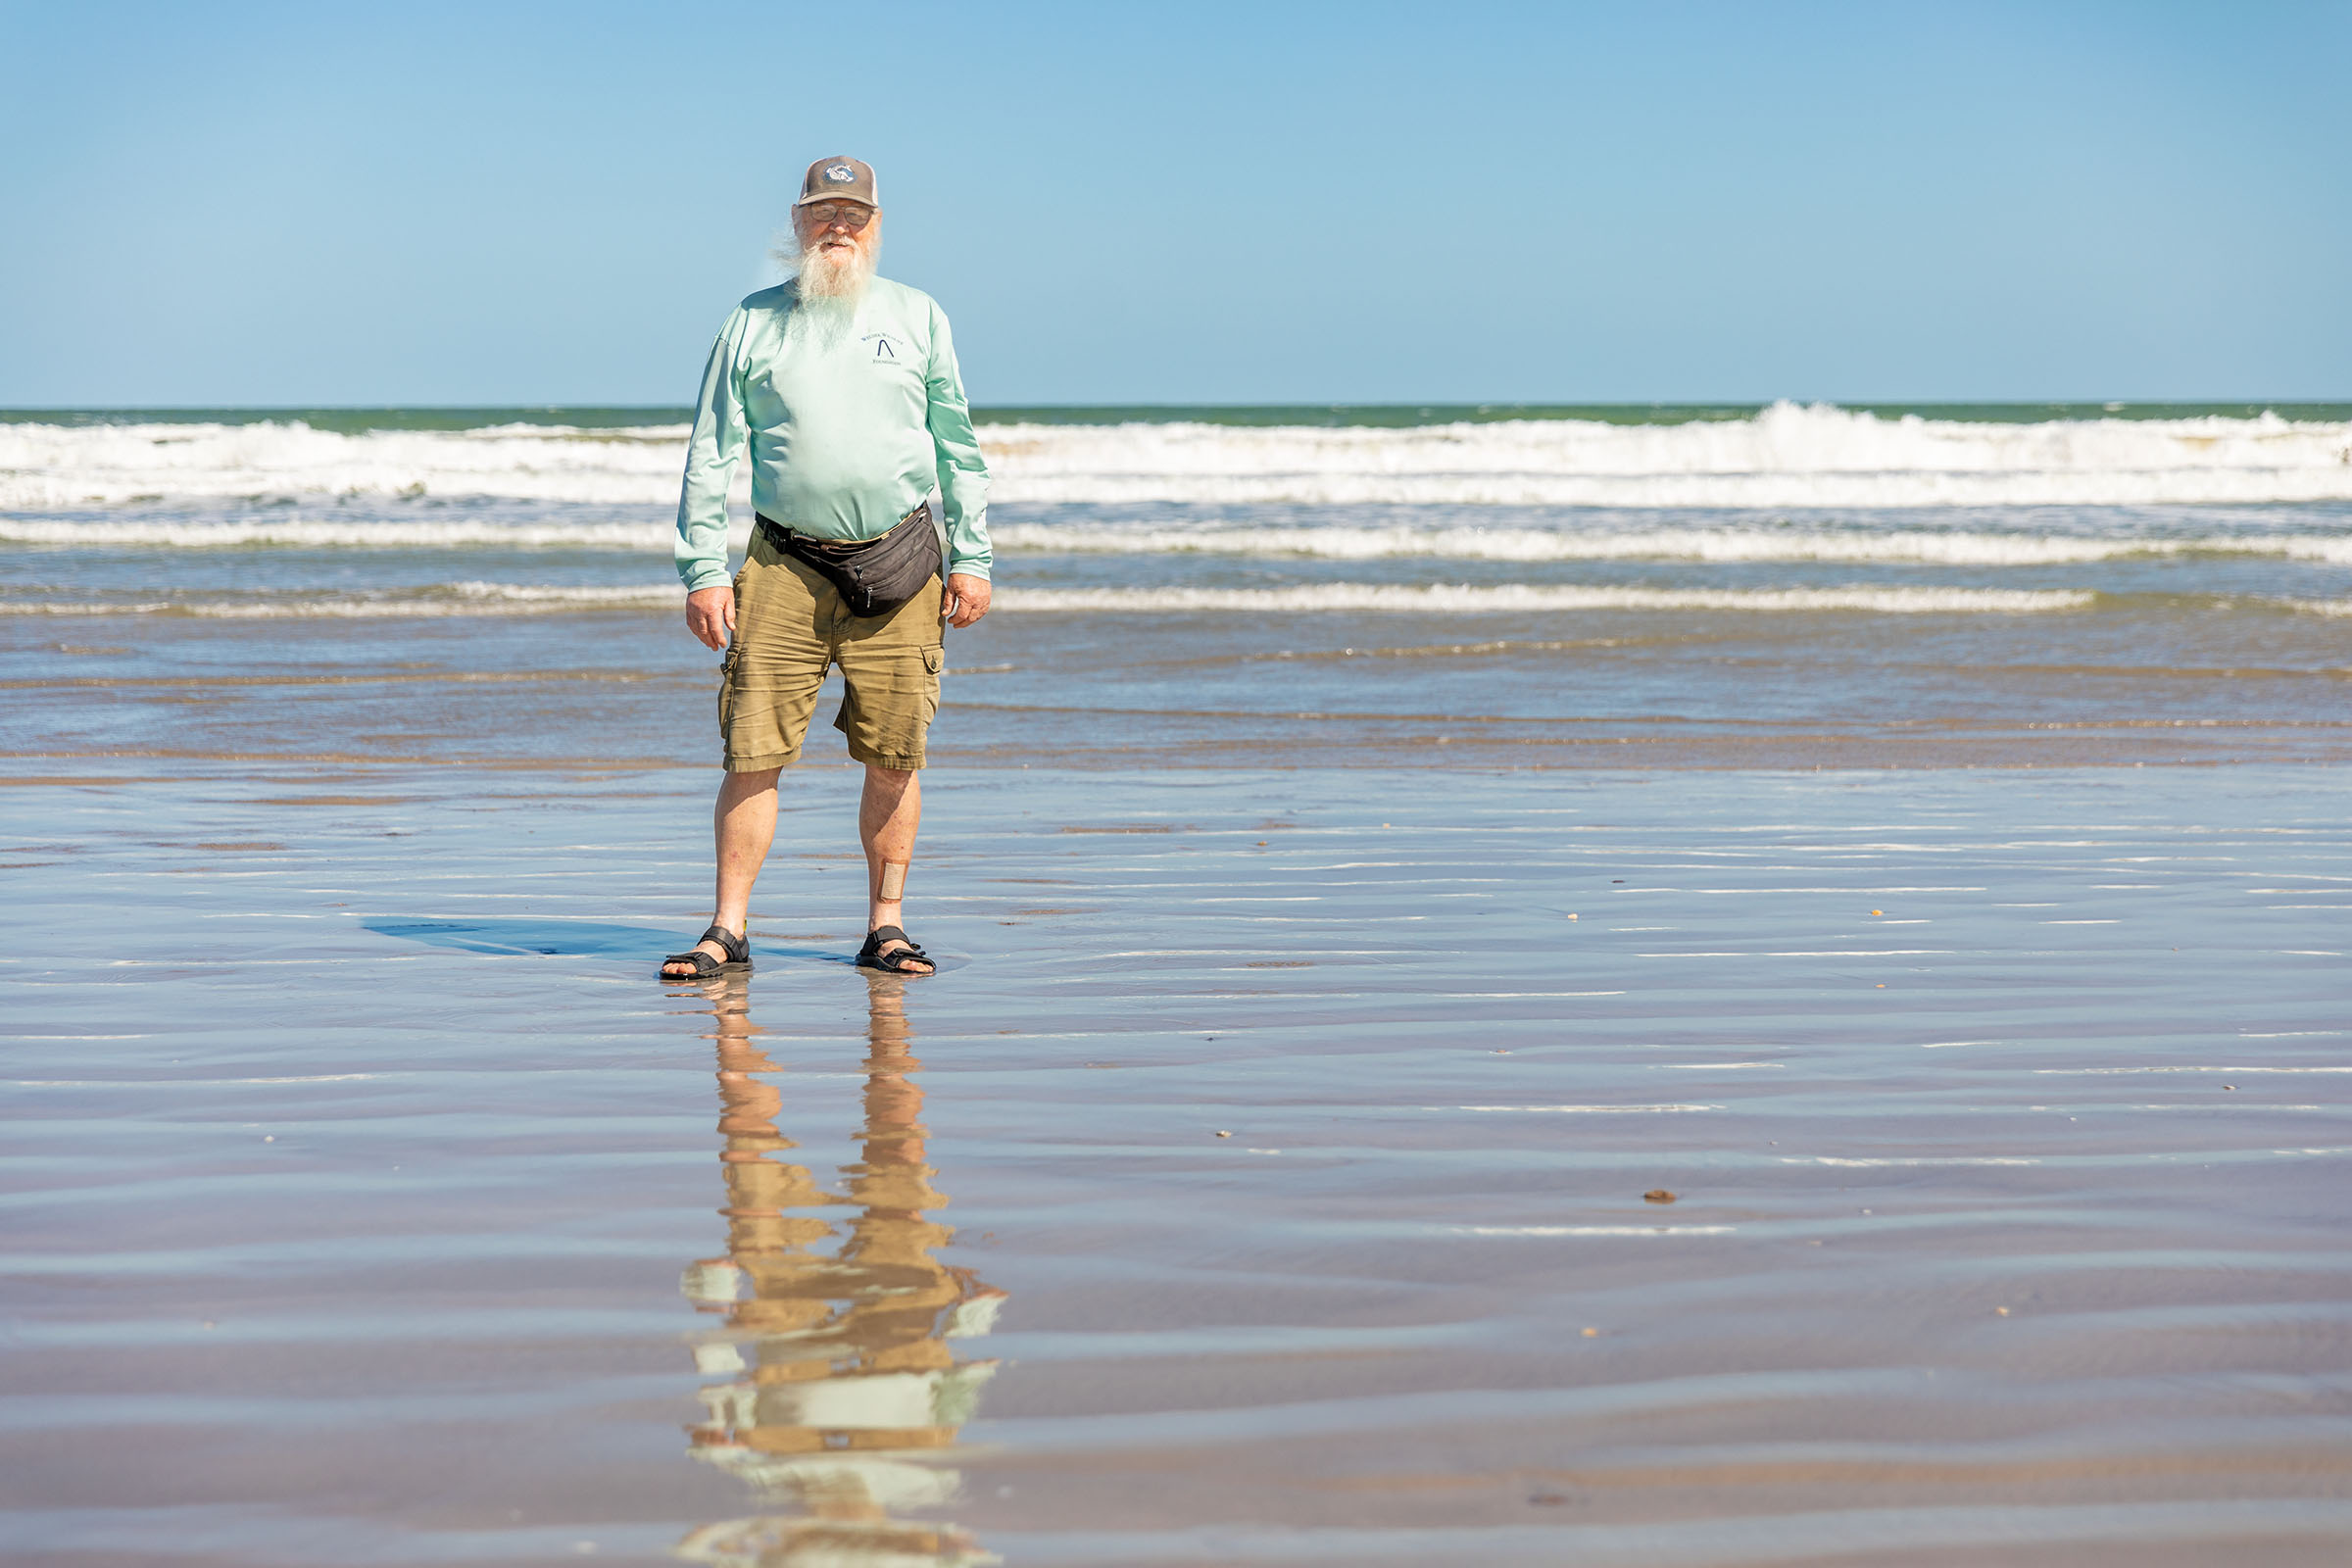 A man in an aqua blue shirt stands on the seashore